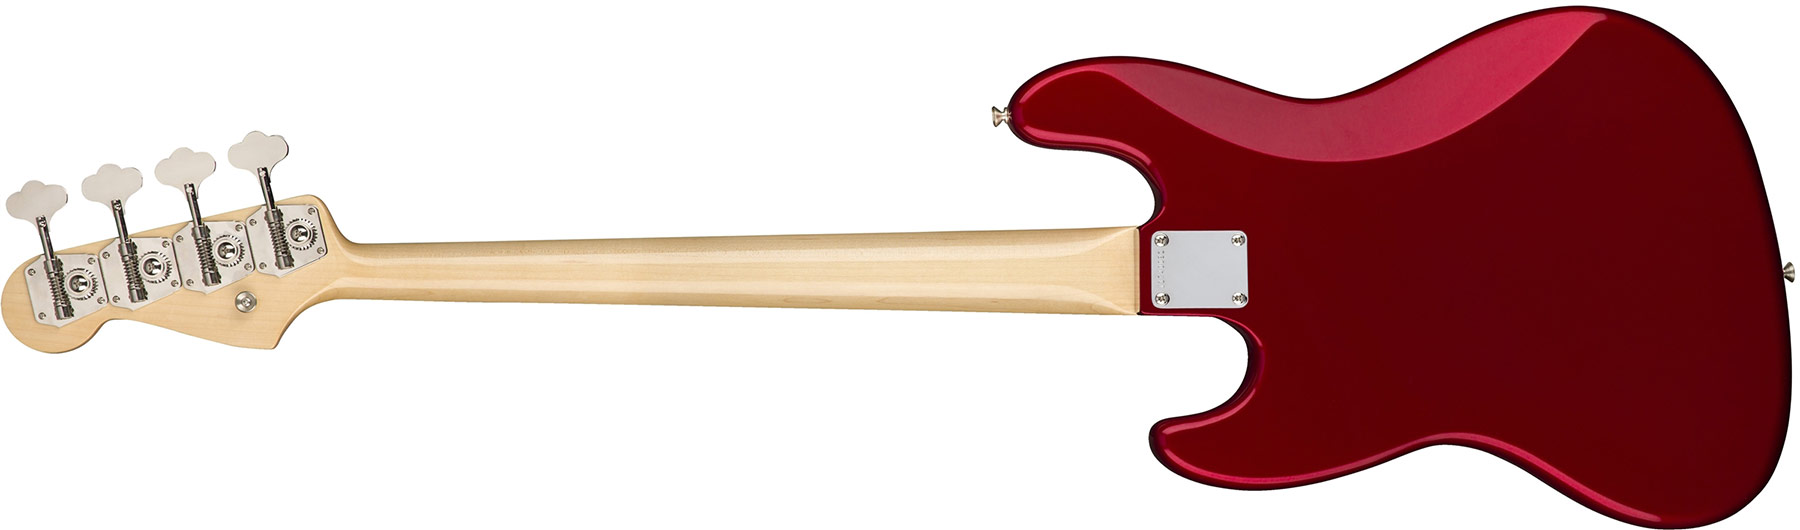 Fender Jazz Bass '60s American Original Usa Rw - Candy Apple Red - Solid body elektrische bas - Variation 2